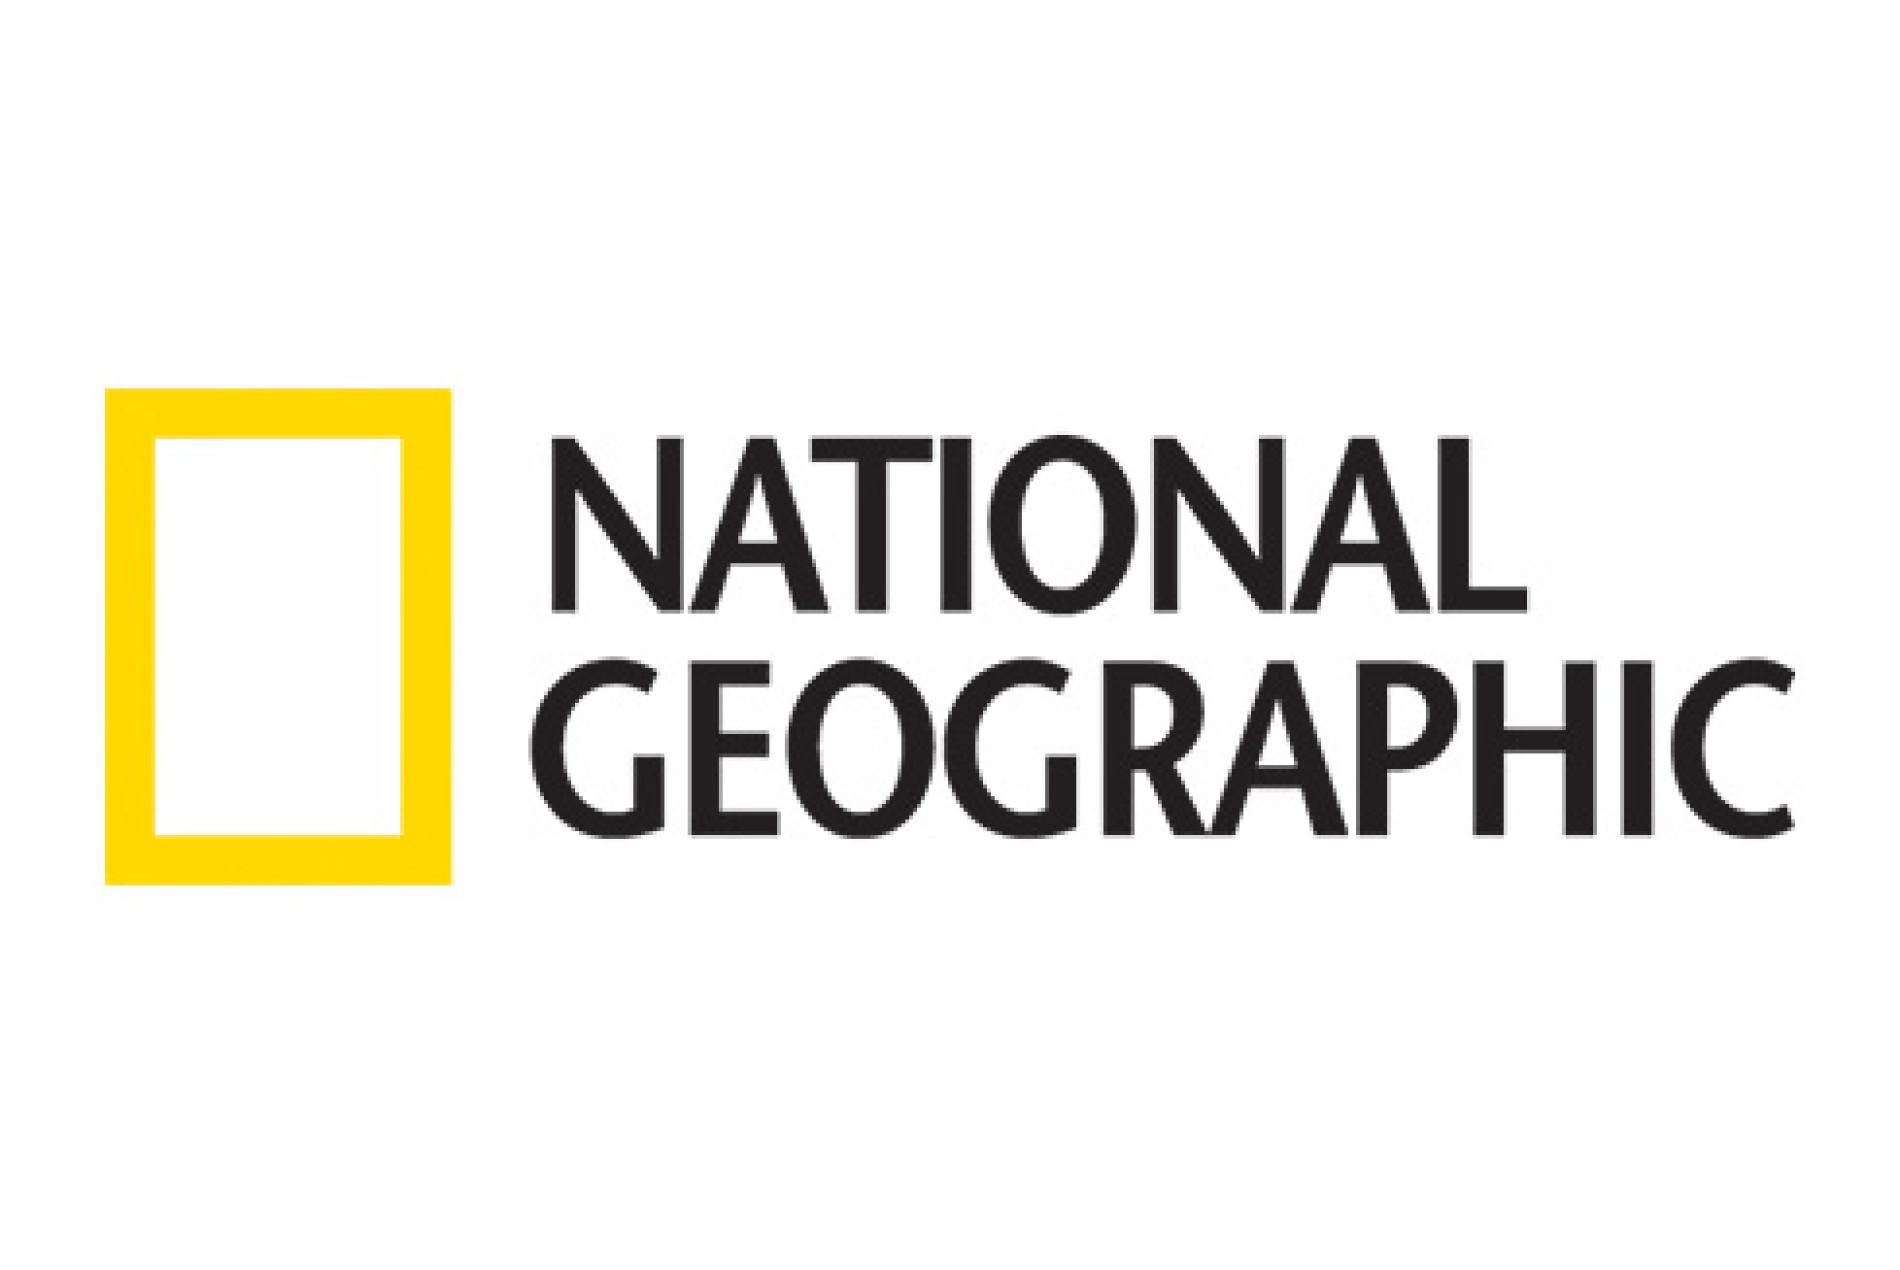 nat-geo-vector-logo-png-national-geographic-channel-logo-png-pluspng-com-1900-national-geographic-channel-logo-1900.jpg